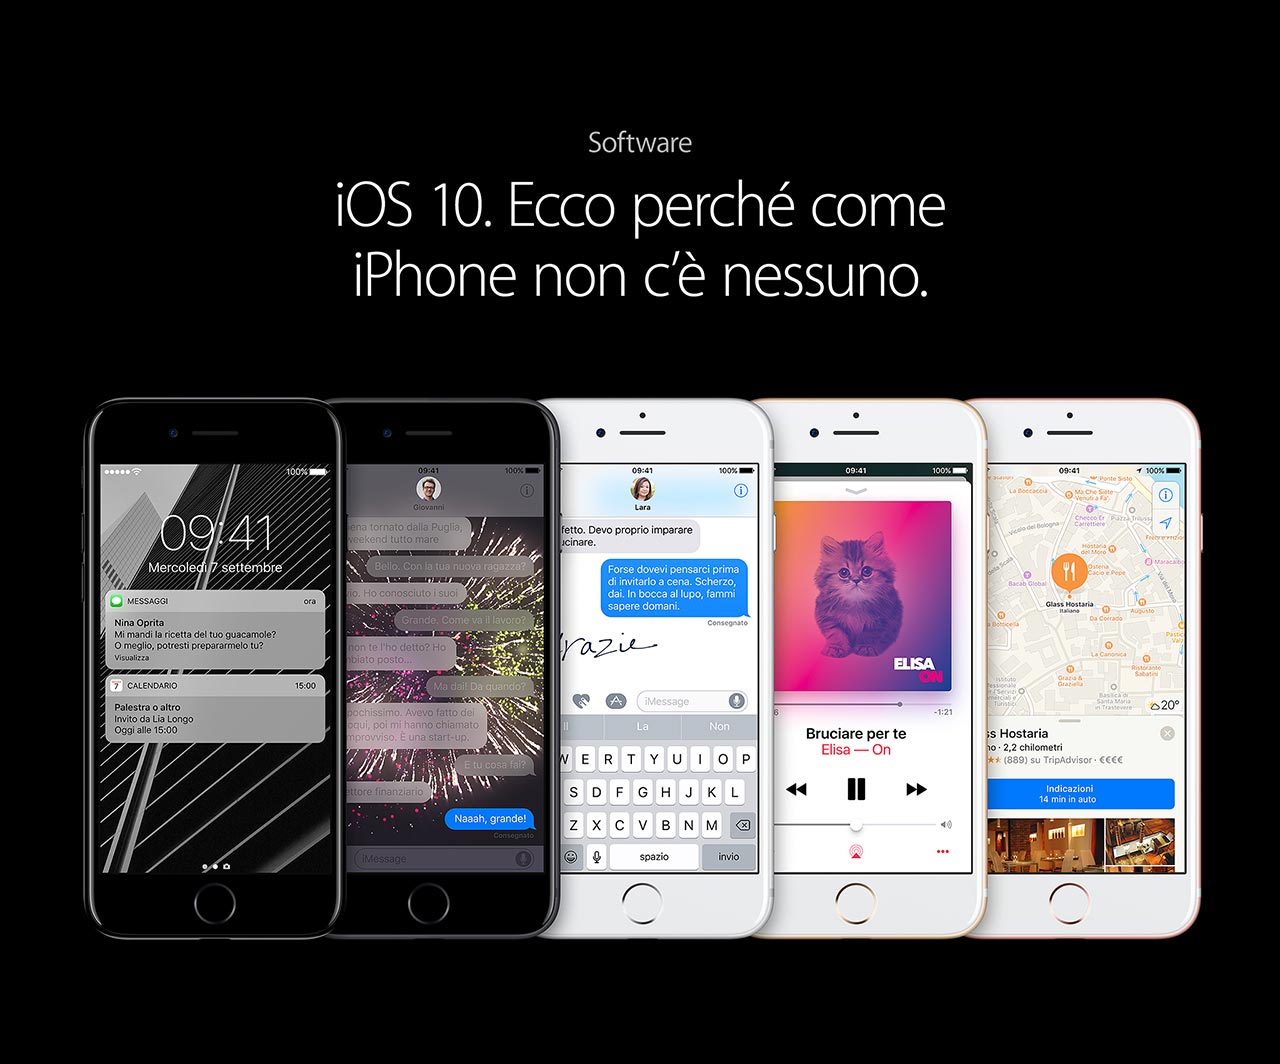 iPhone 7 con iOS 10